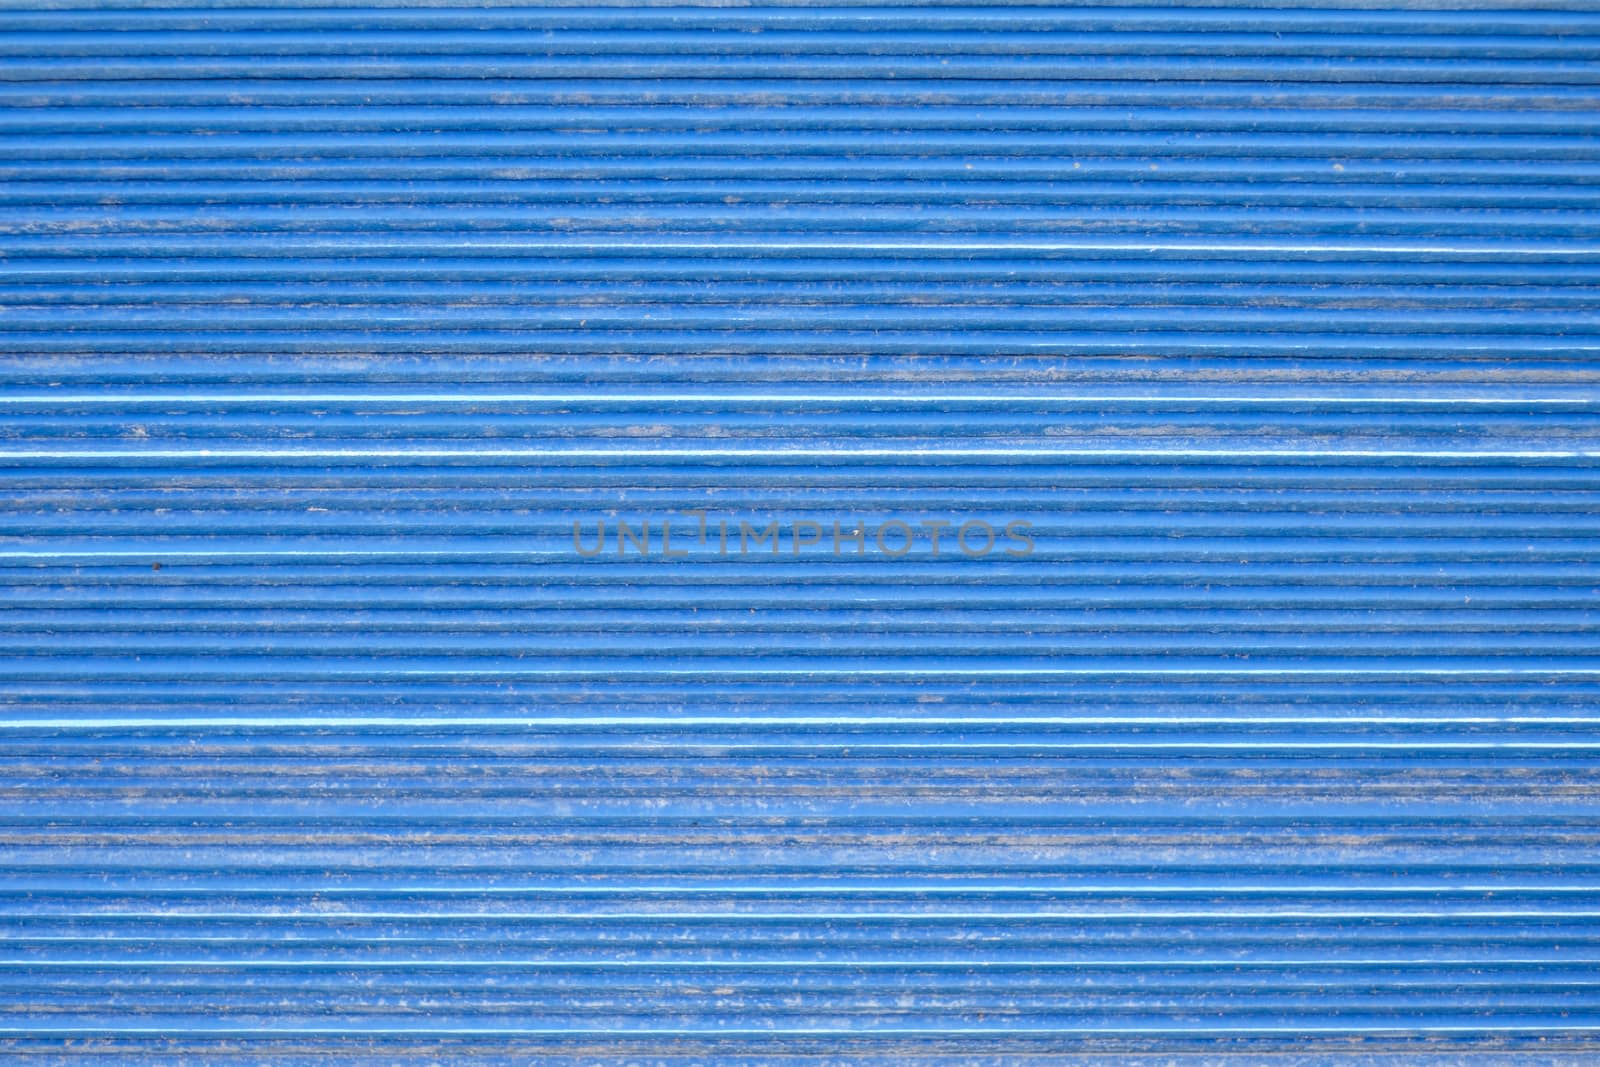 Blue roof tiles arrange by zneb076